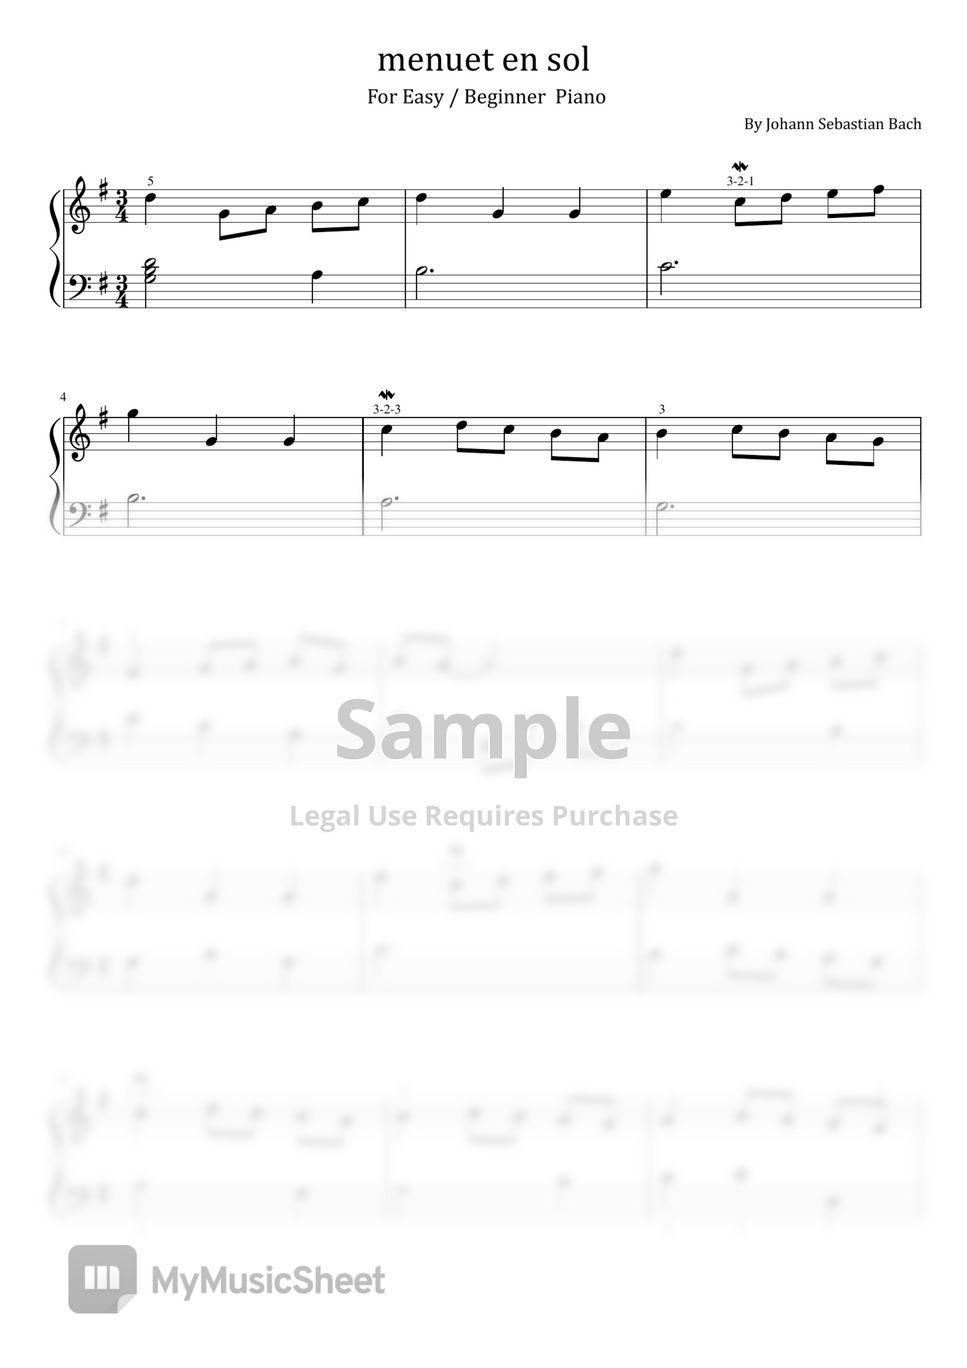 Johann Sebastian Bach - menuet en sol (For Easy / Beginner Piano With Finger) by poon